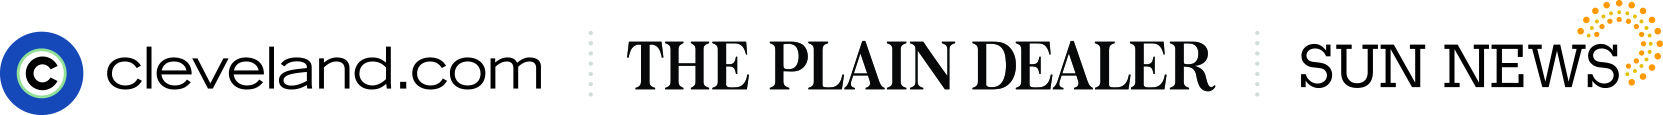 cleveland.com The Plain Dealer Sun News